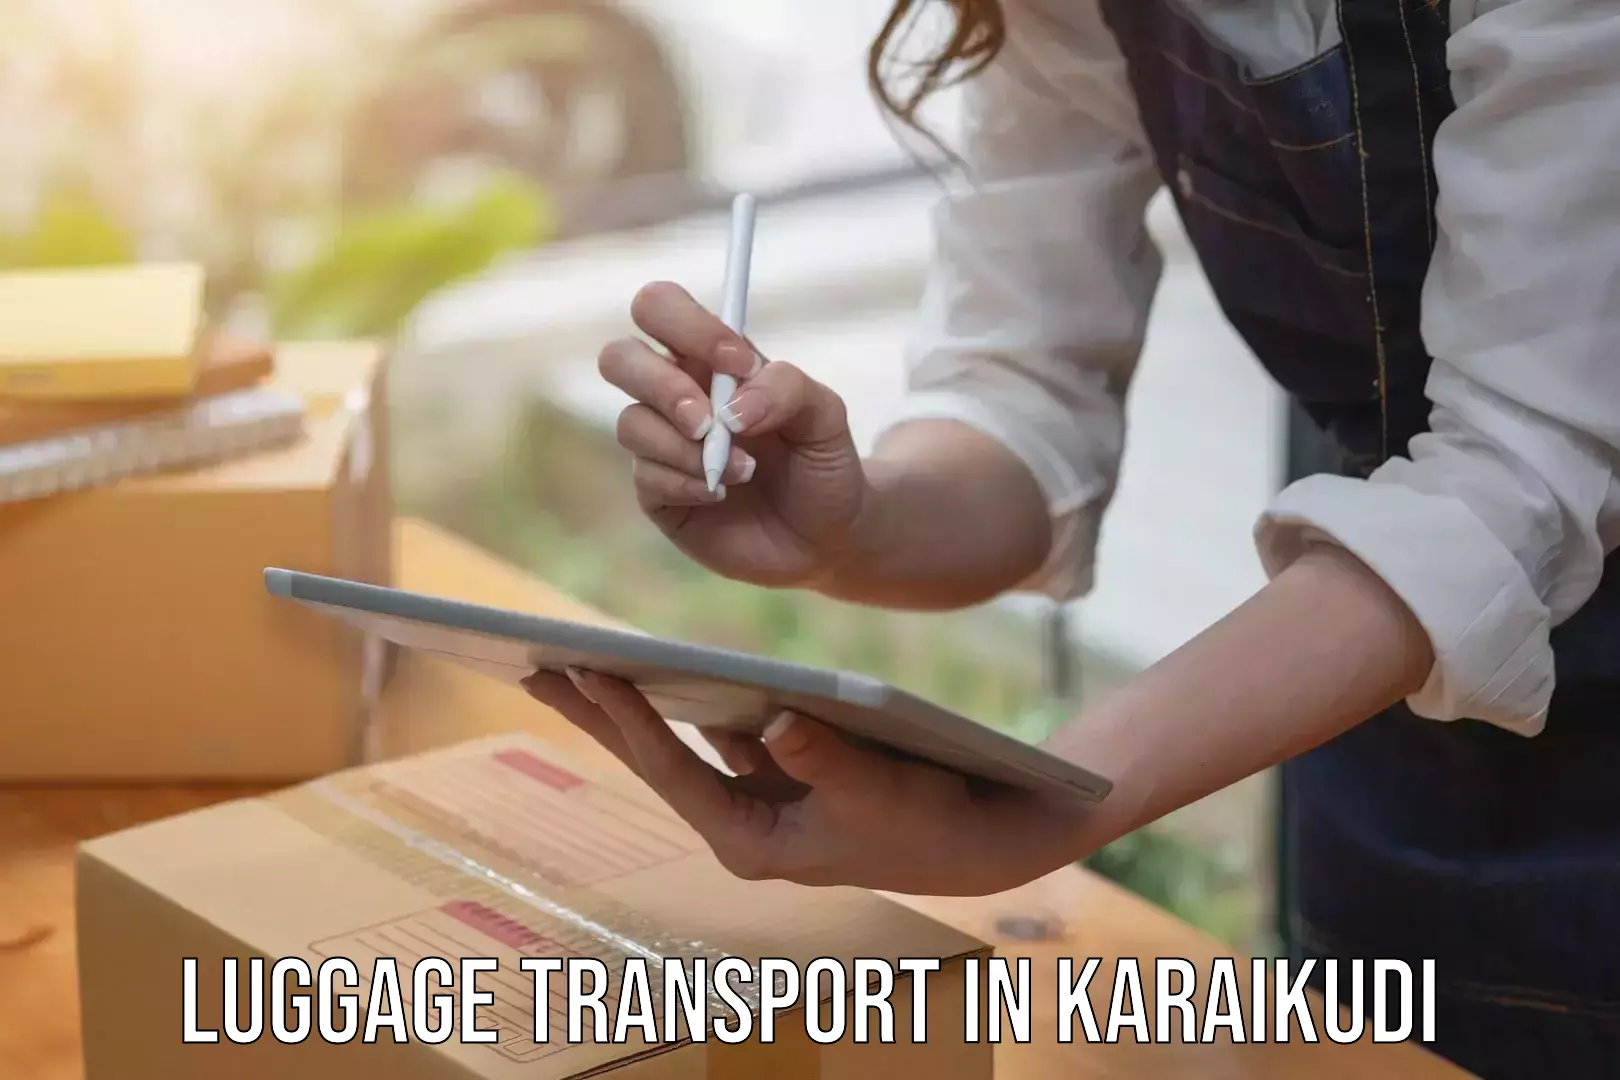 Fast track baggage delivery in Karaikudi